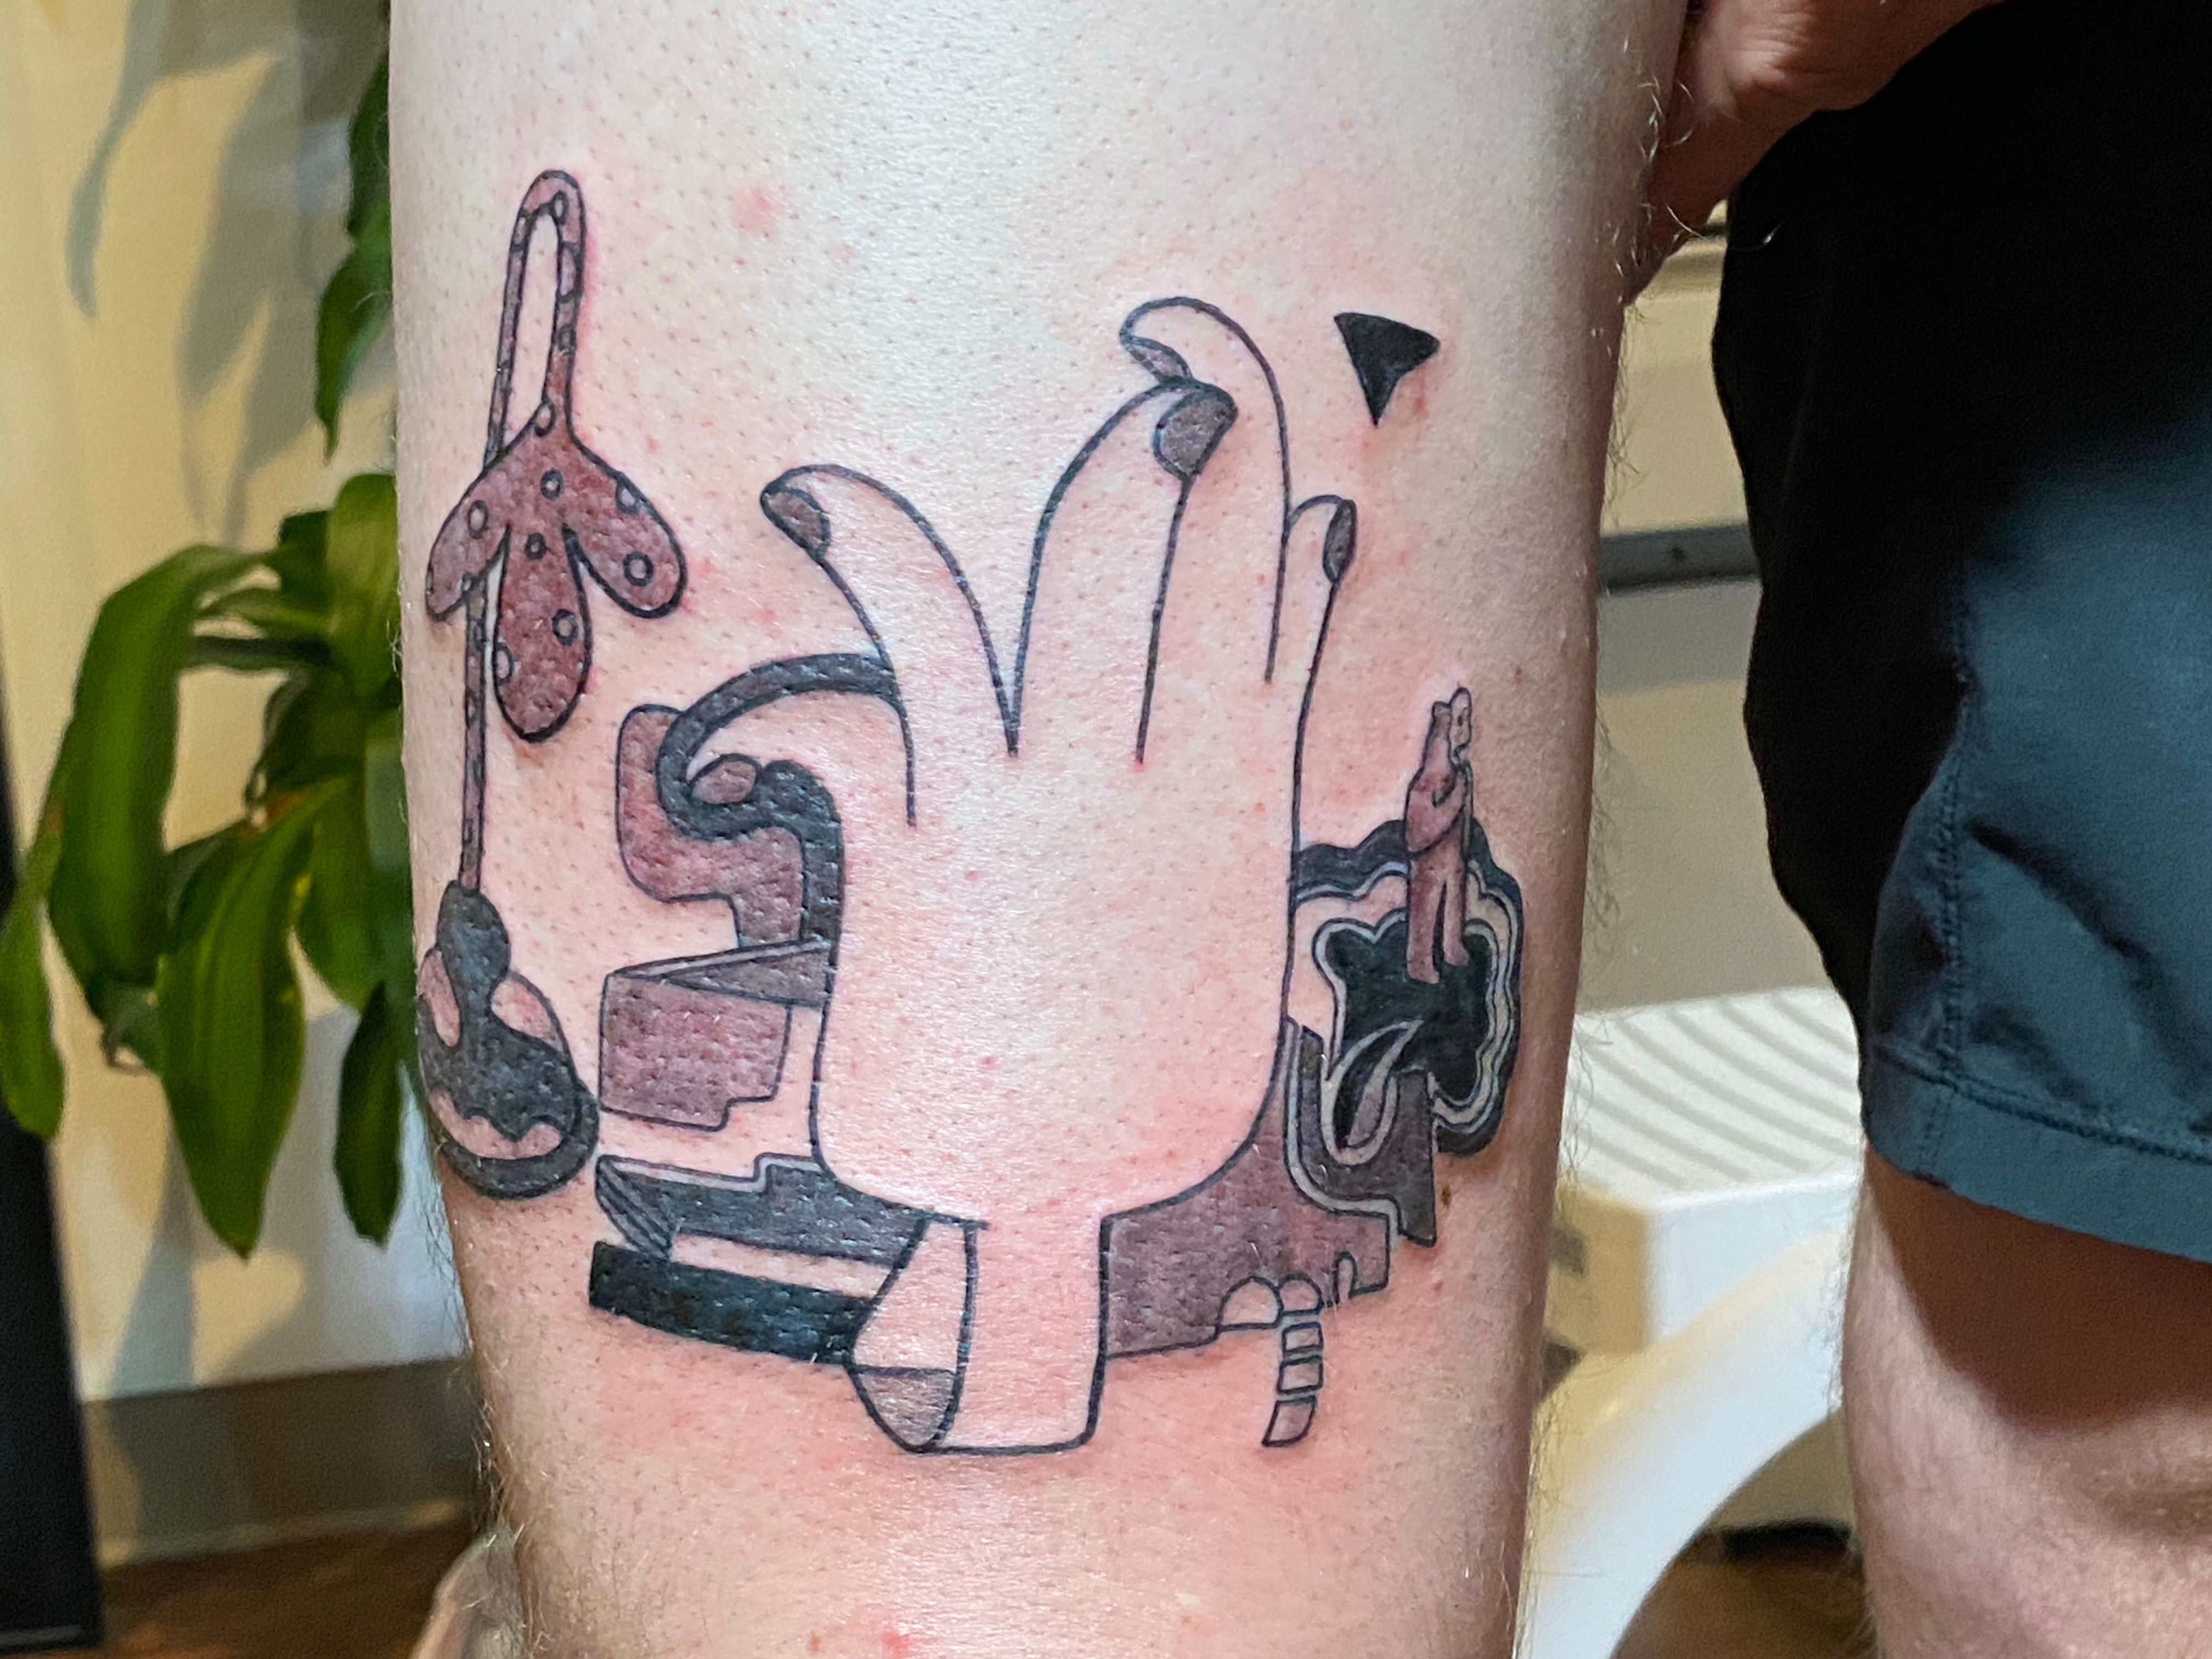 Mac Miller Tribute Tattoo  Mac miller tattoos Tribute tattoos Tattoos